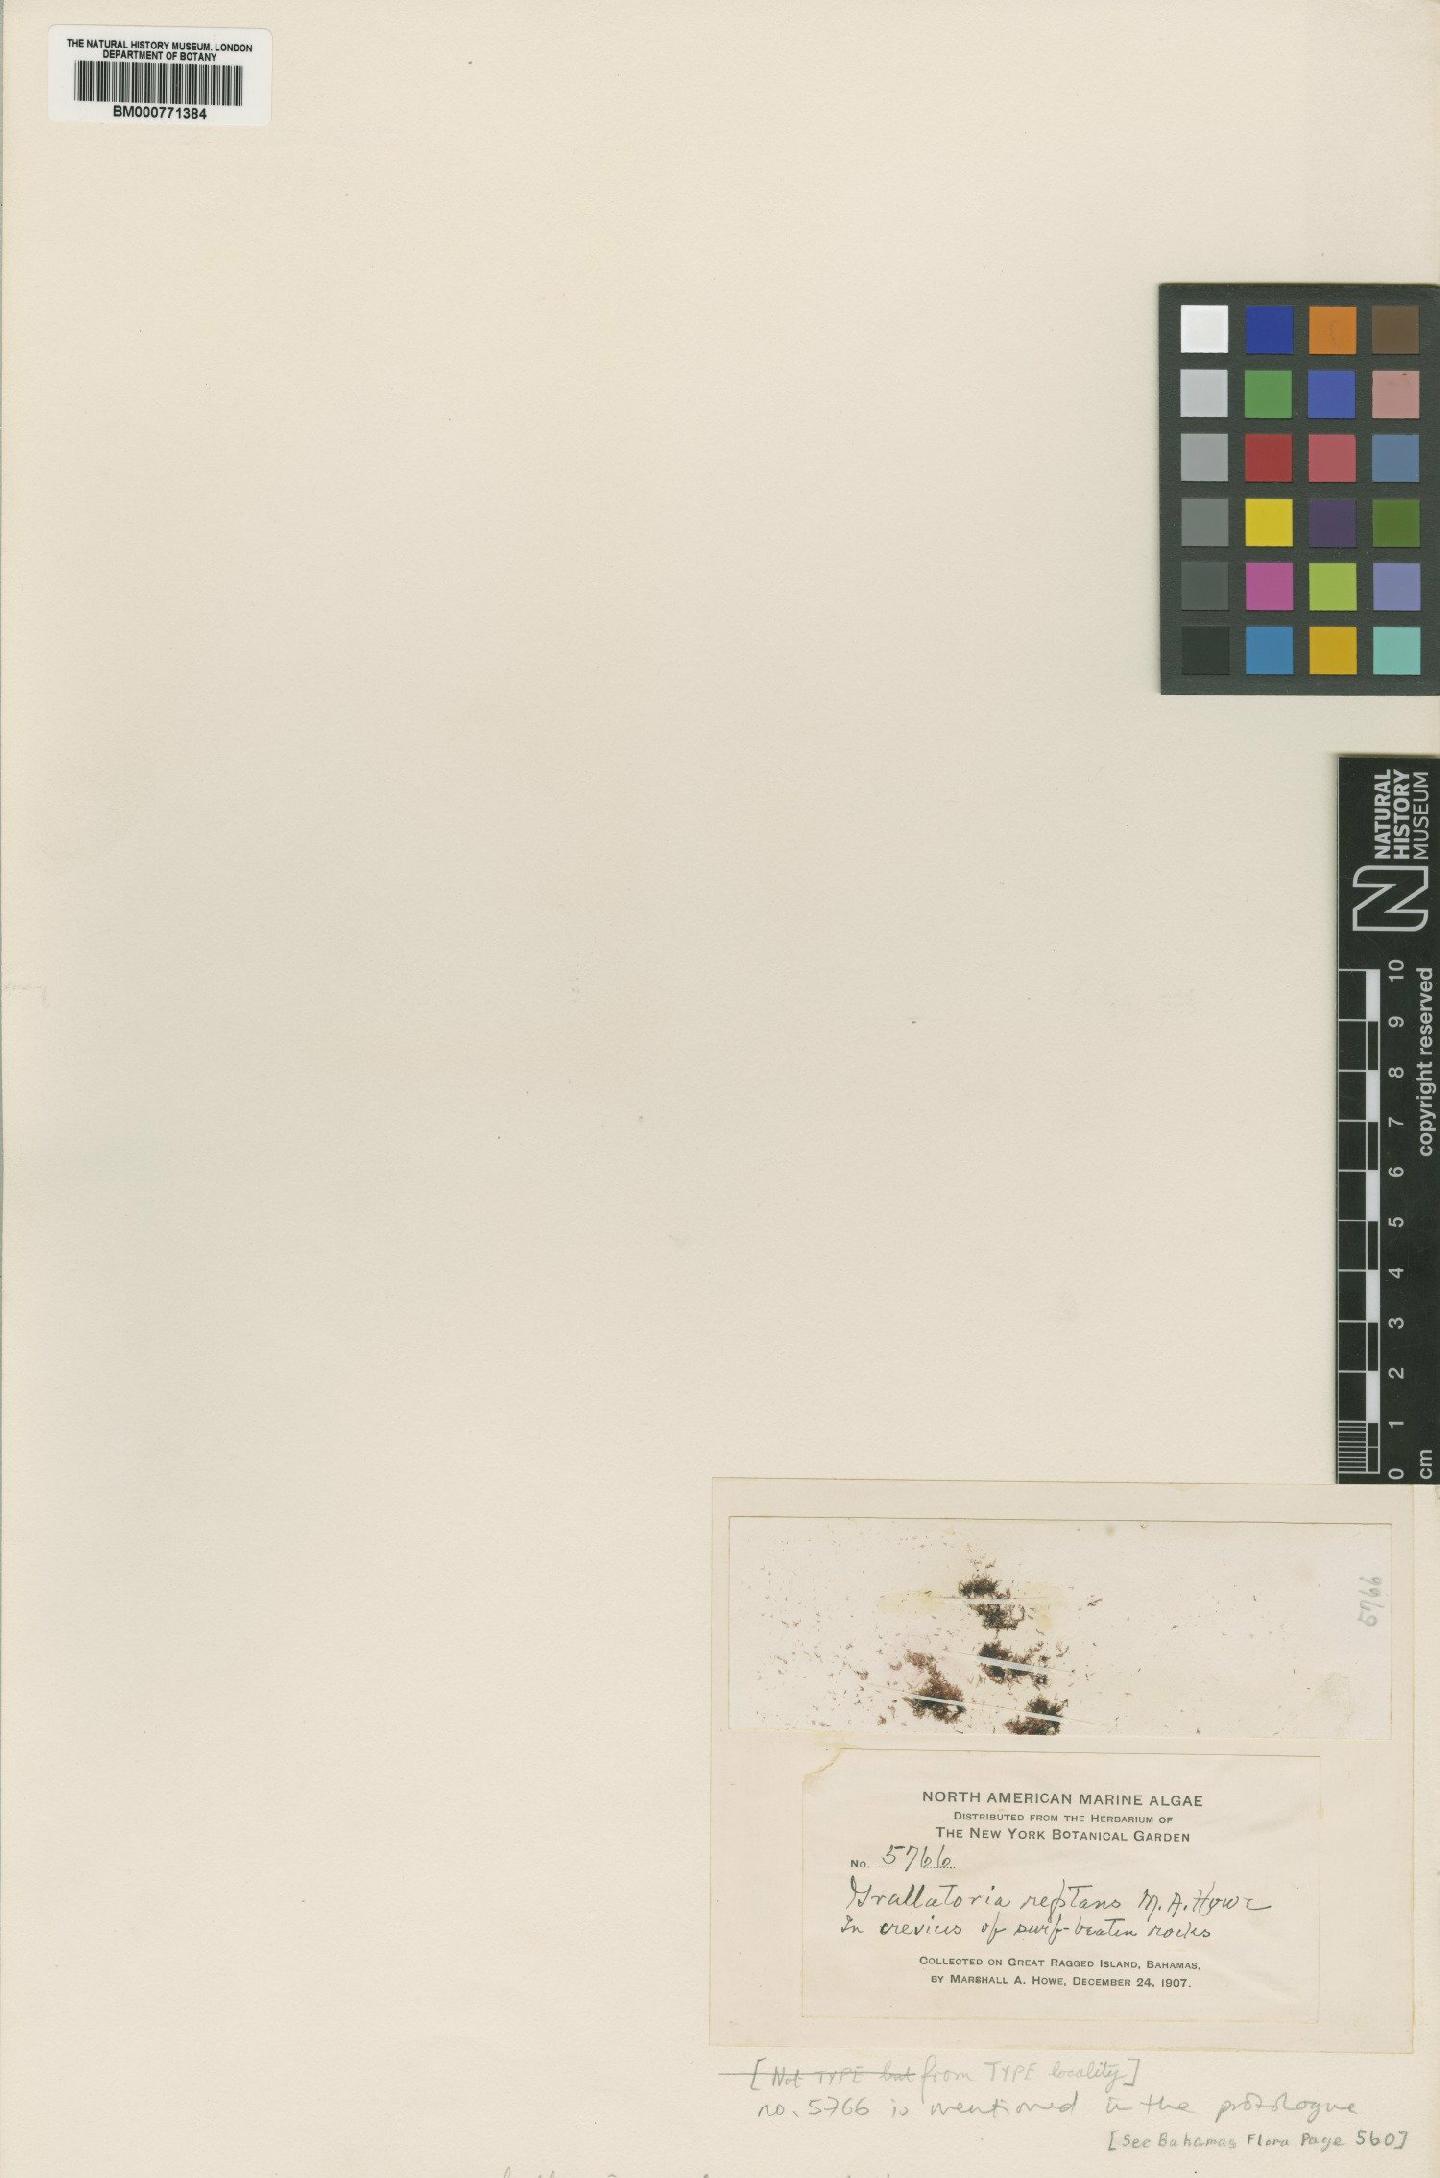 To NHMUK collection (Grallatoria reptans M.Howe; Isosyntype; NHMUK:ecatalogue:436425)